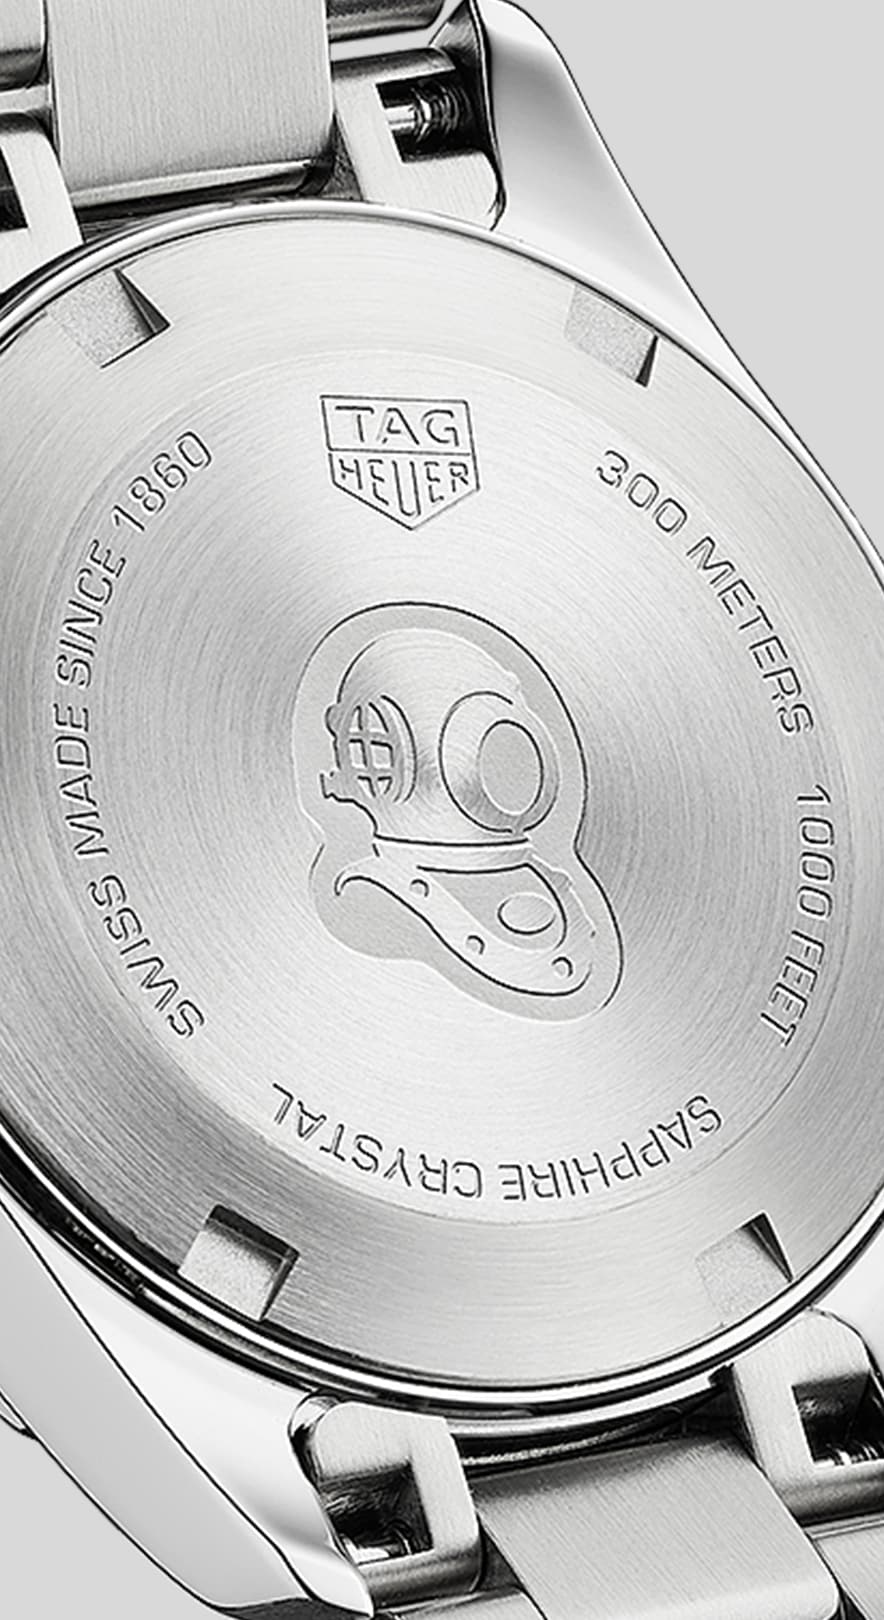 TAG Heuer Good Product [TAG HEUER] TAG Heuer Carrera Chronograph Diamond Bezel CV2116 Automatic Winding Men's [ev10] [Used]